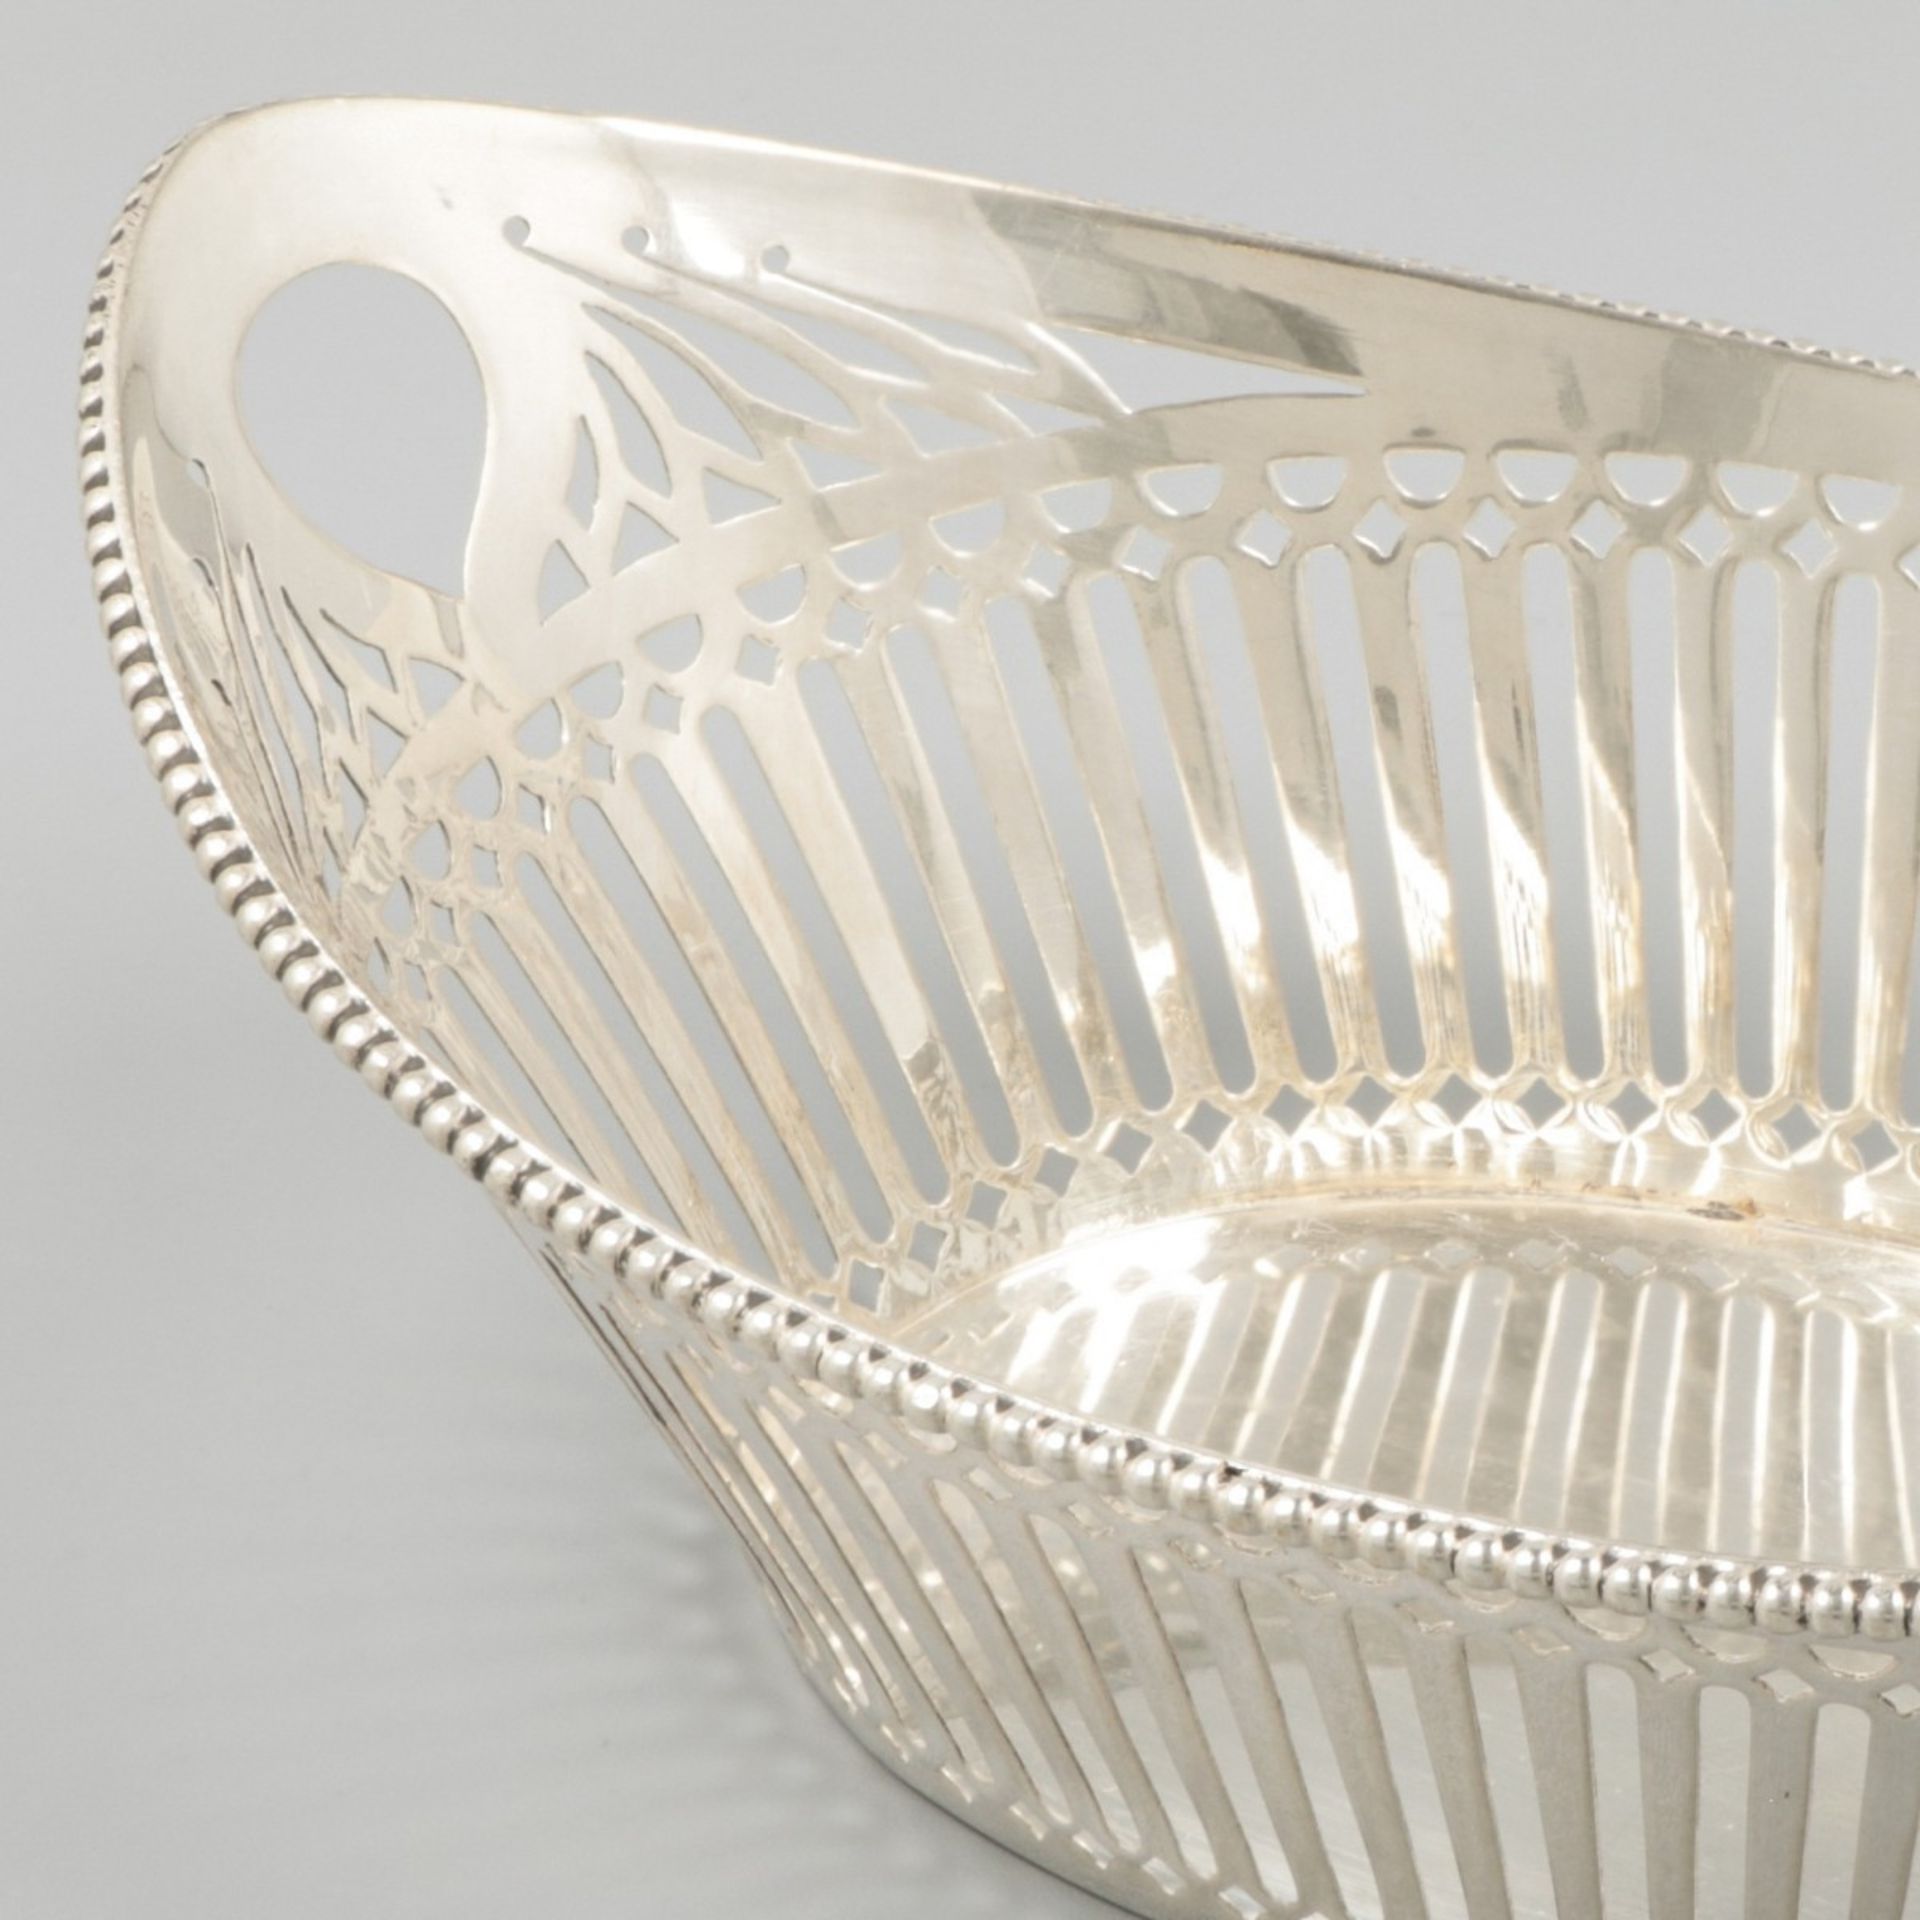 Silver bonbon basket. - Image 2 of 5